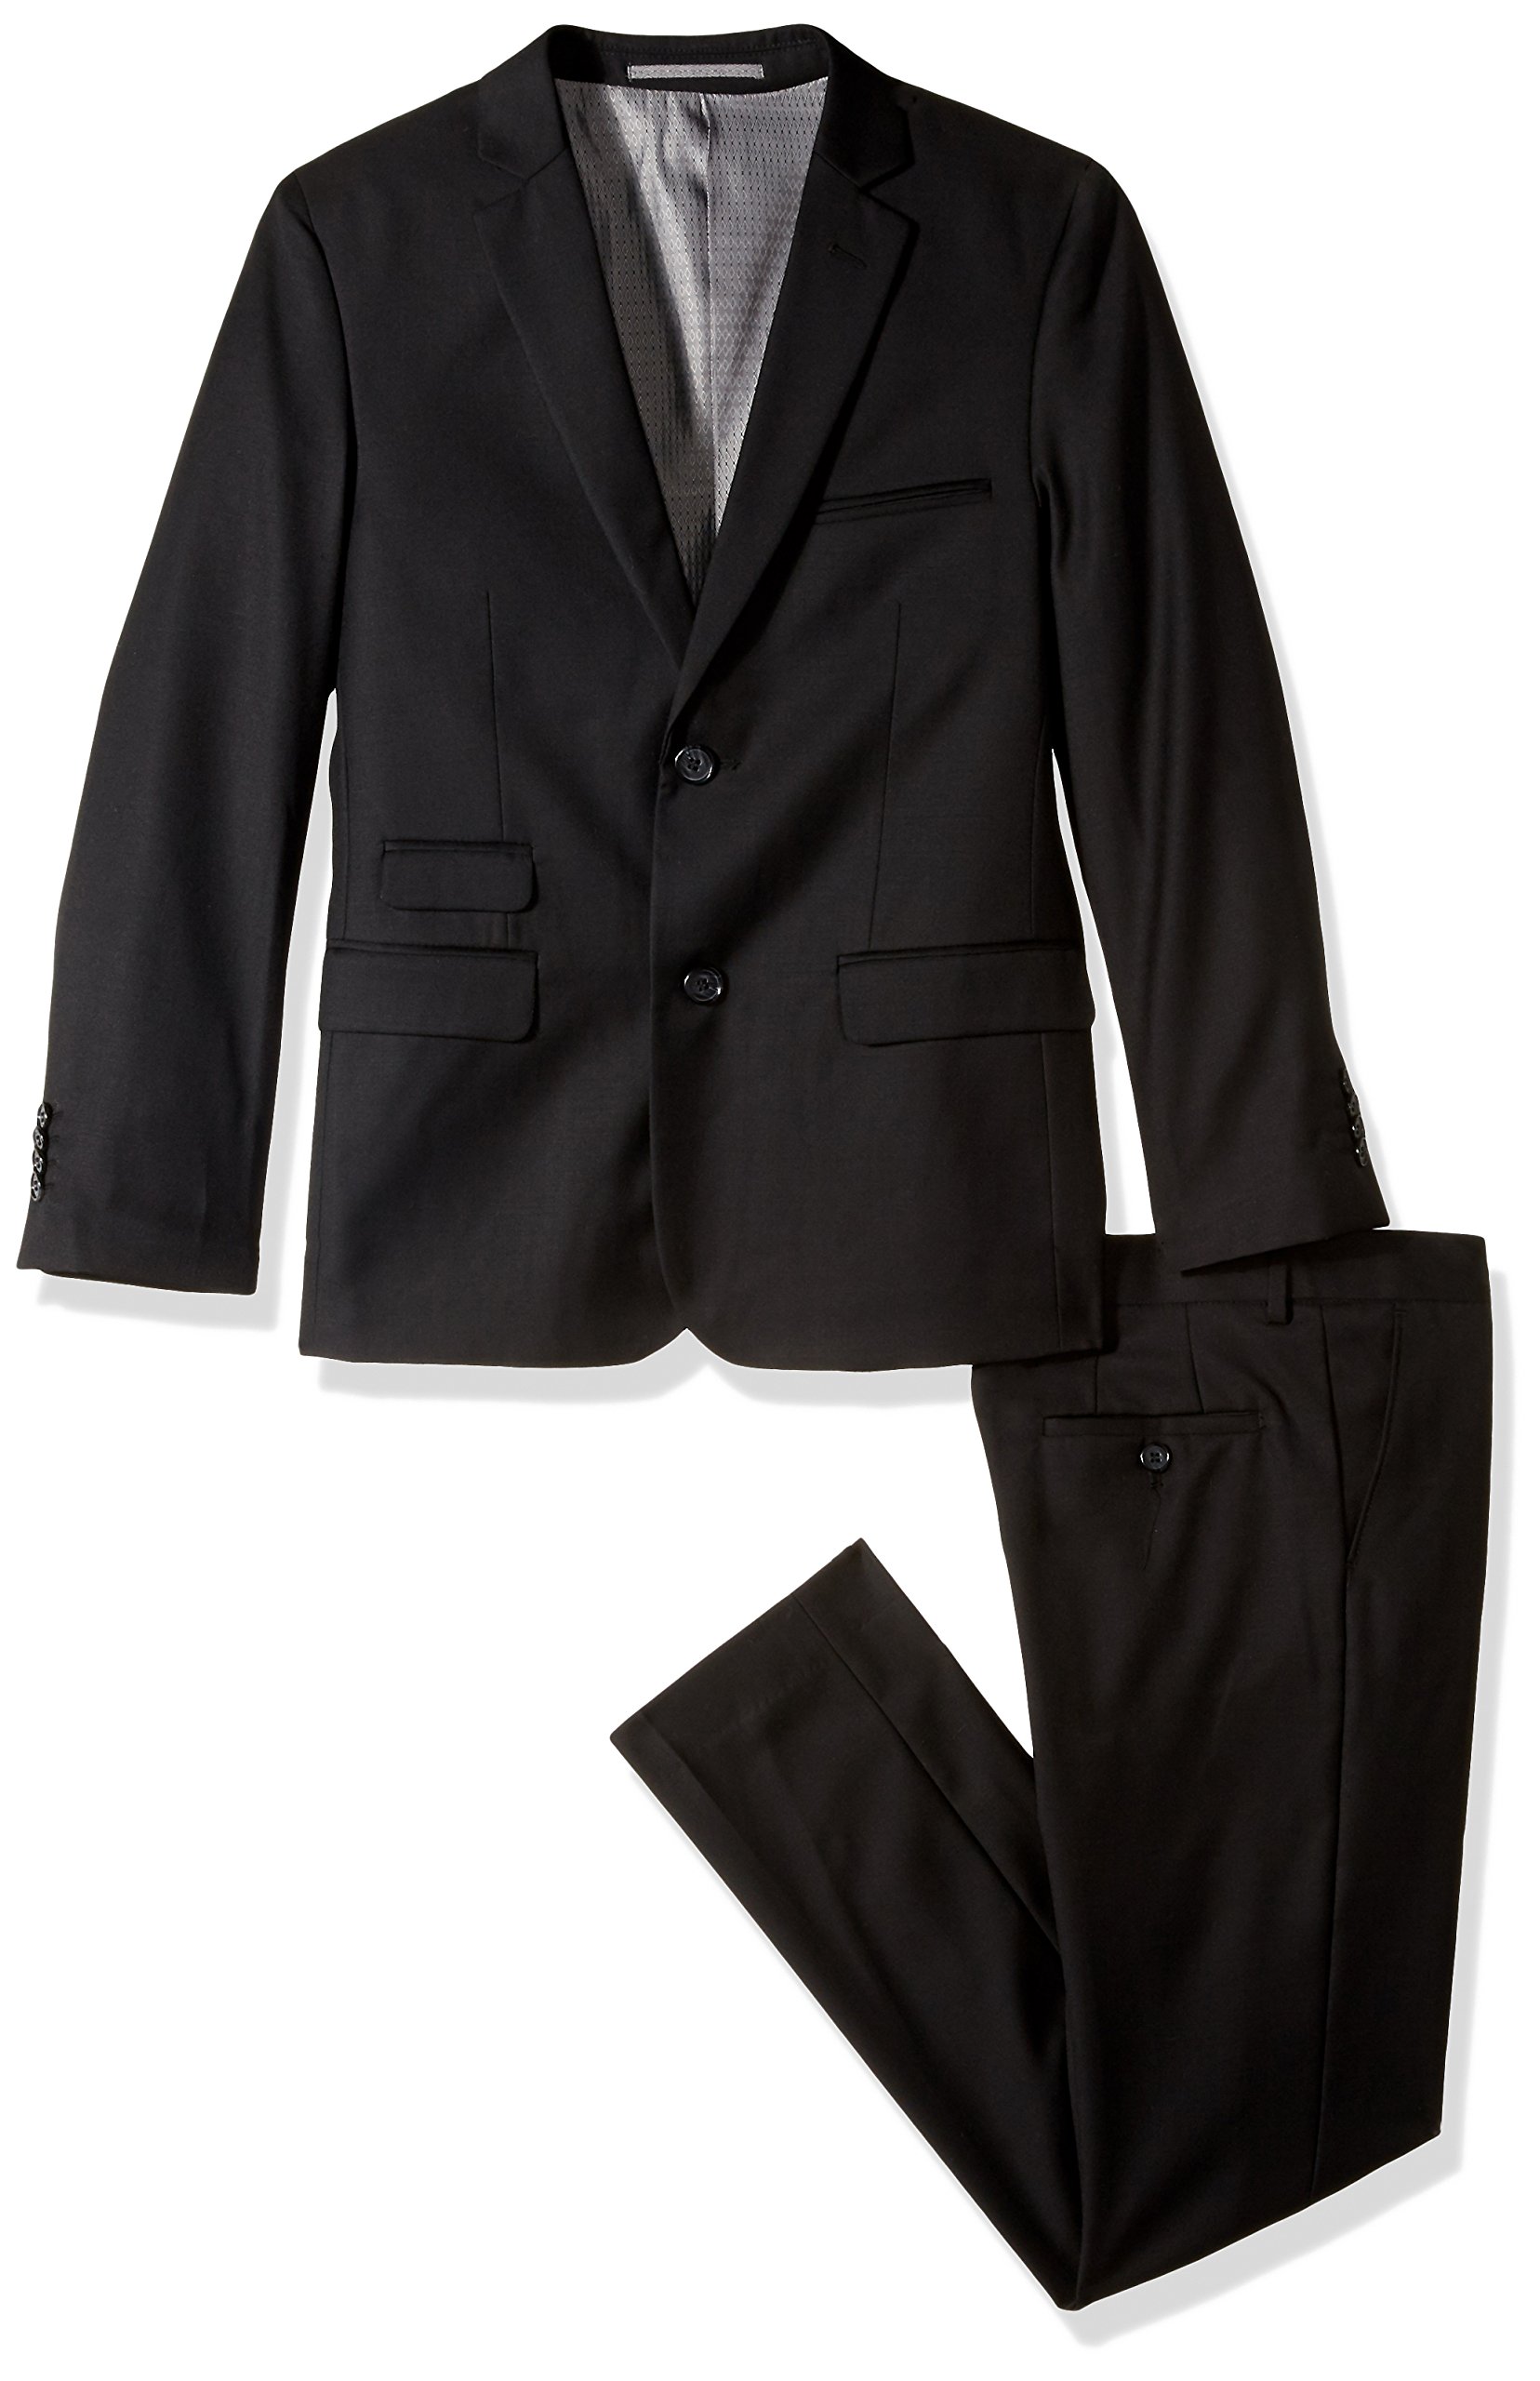 Isaac Mizrahi Boys' Solid 2pc Slim Fit Wool Suit